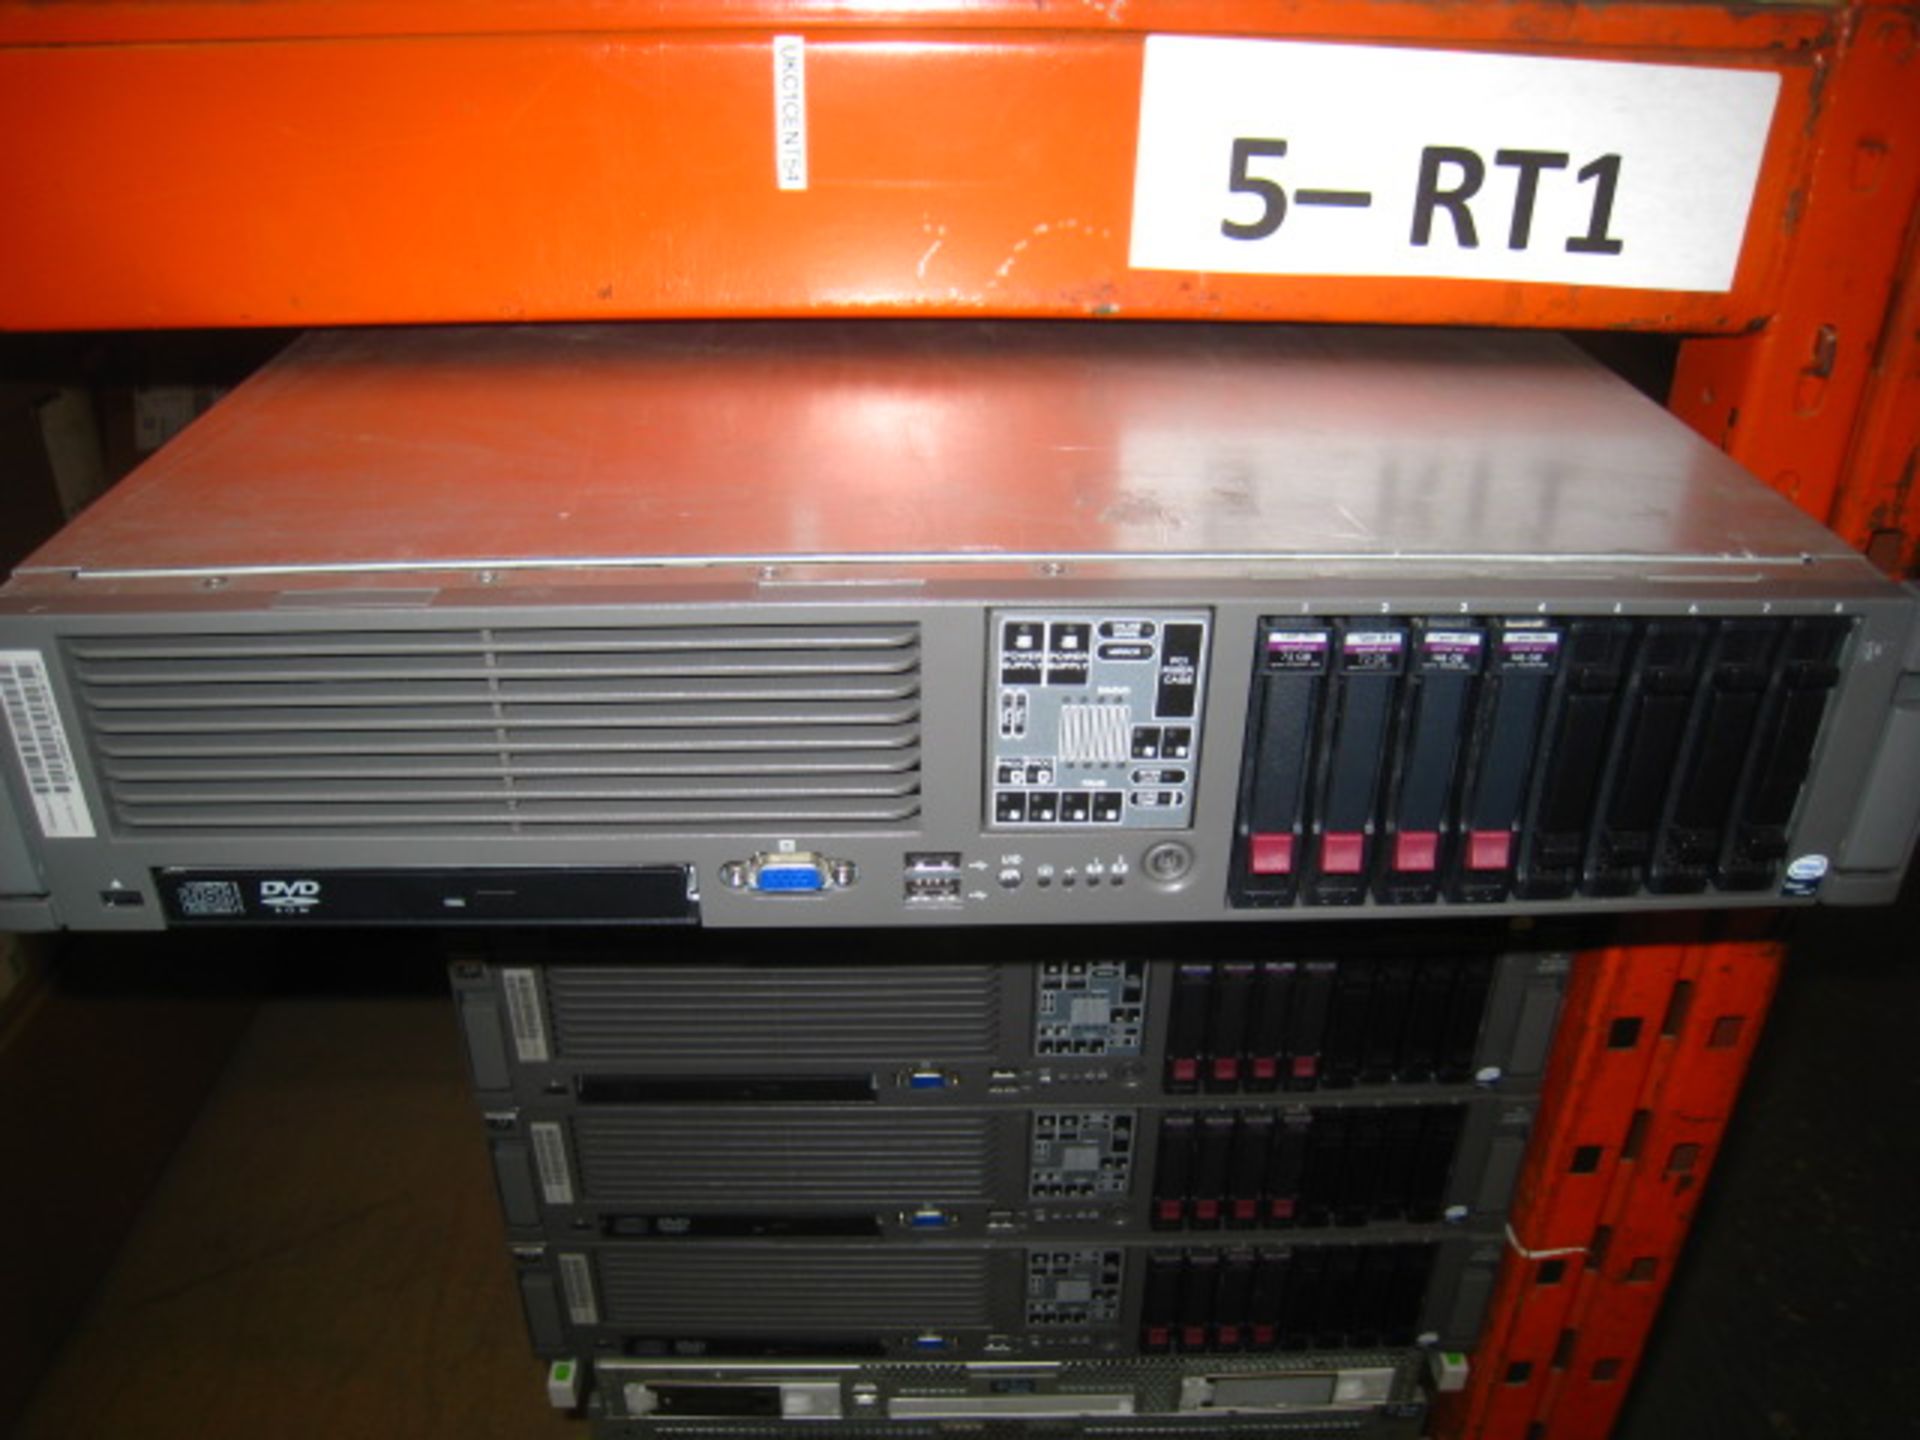 HP PROLIANT DL380 G5 2U RACKMOUNT FILE SERVER. 2 X QUAD CORE 1.8GHZ PROCESSORS, 8GB RAM, 2 X